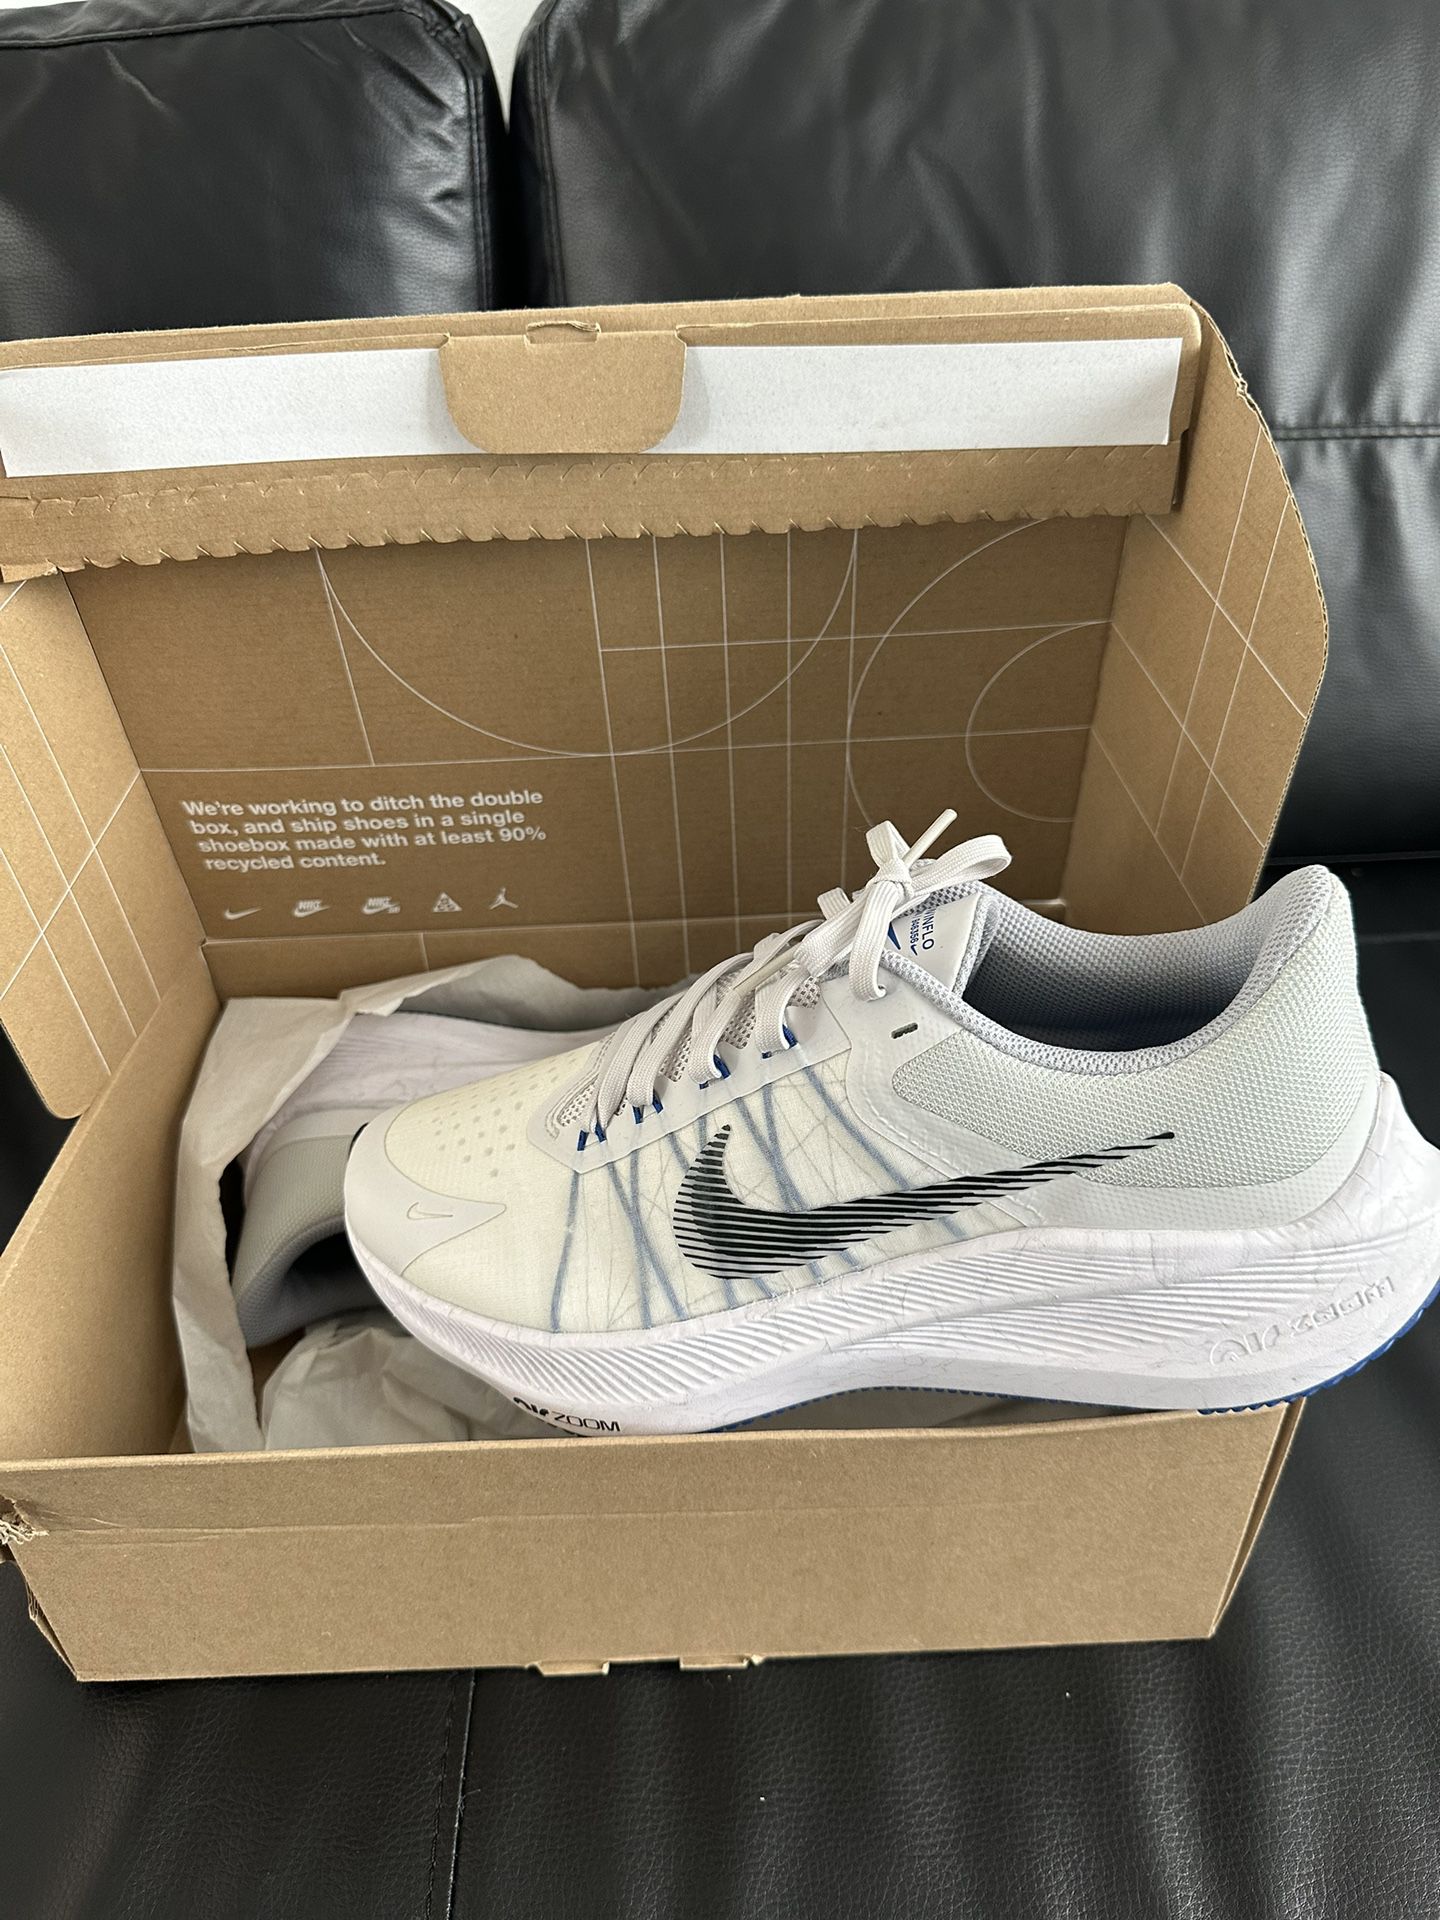 Nike Men’s Shoes Size 10